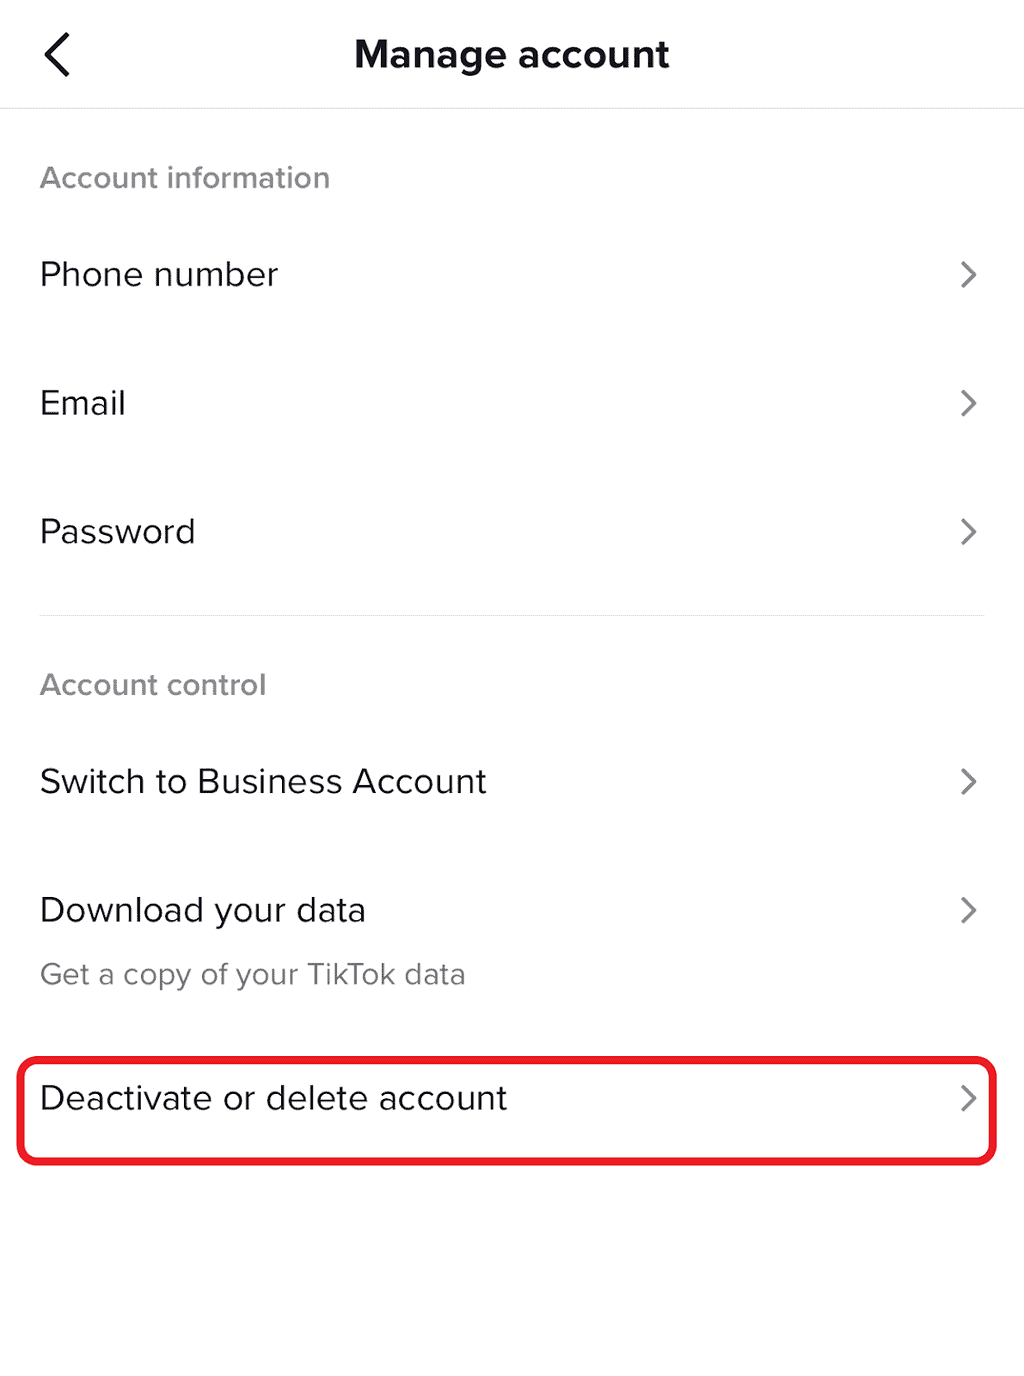 deactivate or delete account